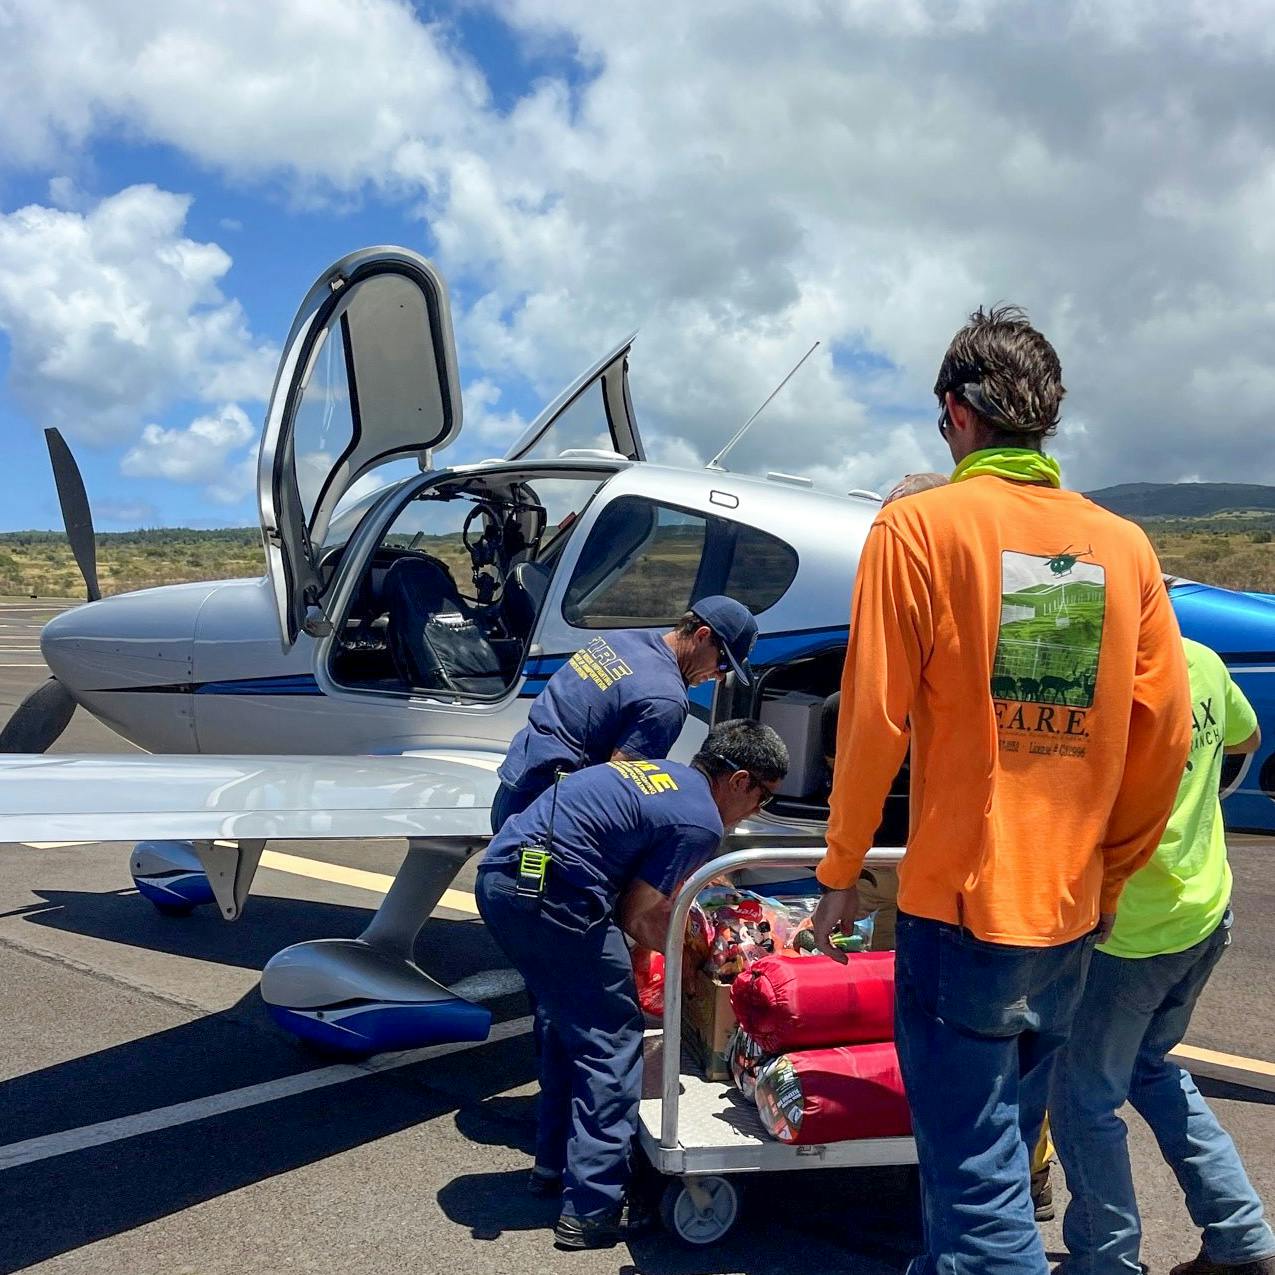 Episode 182: Maui pilot organizes fire relief efforts